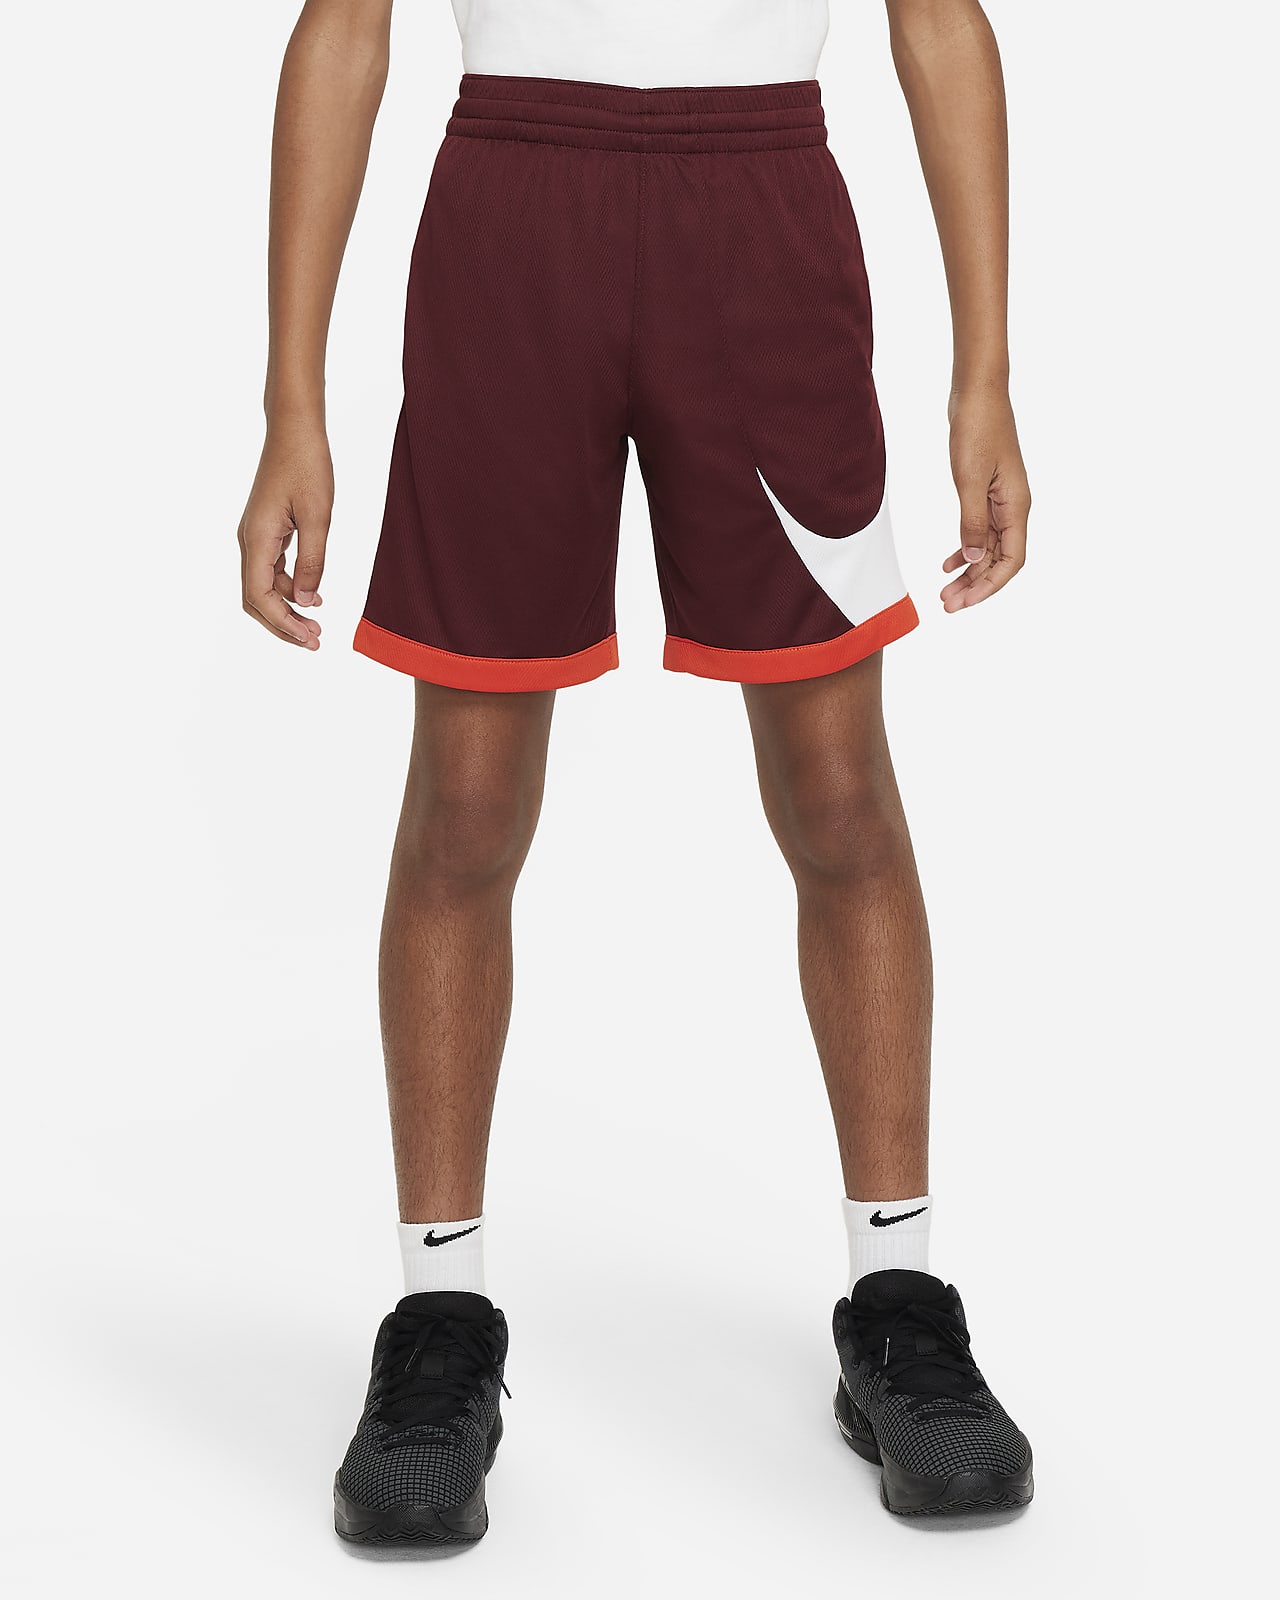 NWT Nike Boys YXL Blue/Gray/Black/White BASEBALL Dri-Fit Shorts Set XL